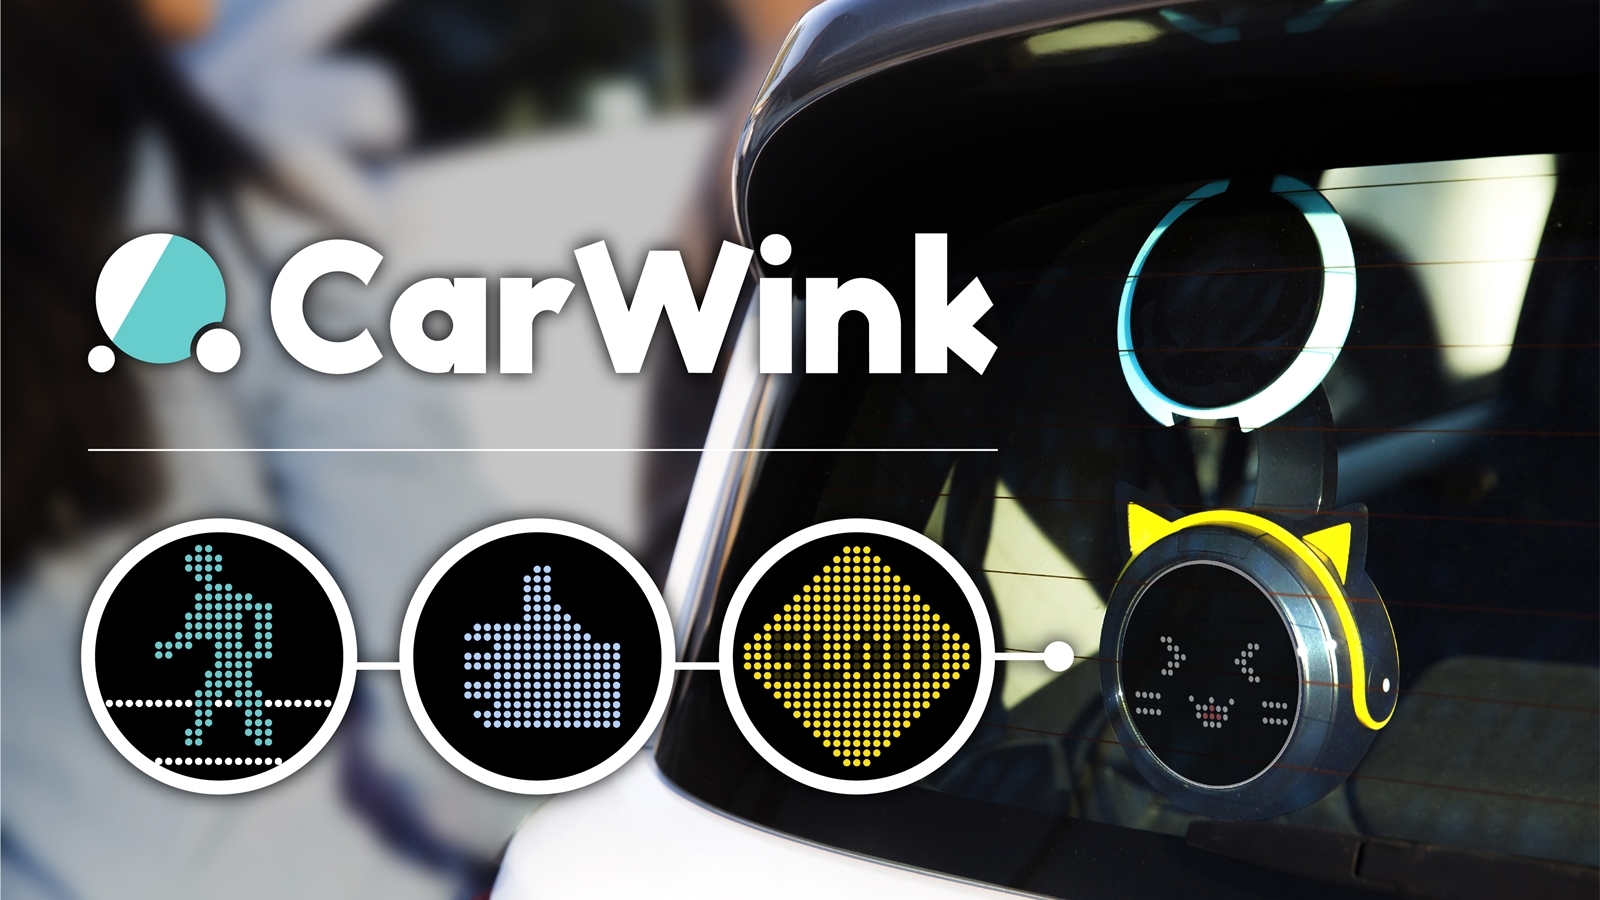 CarWink